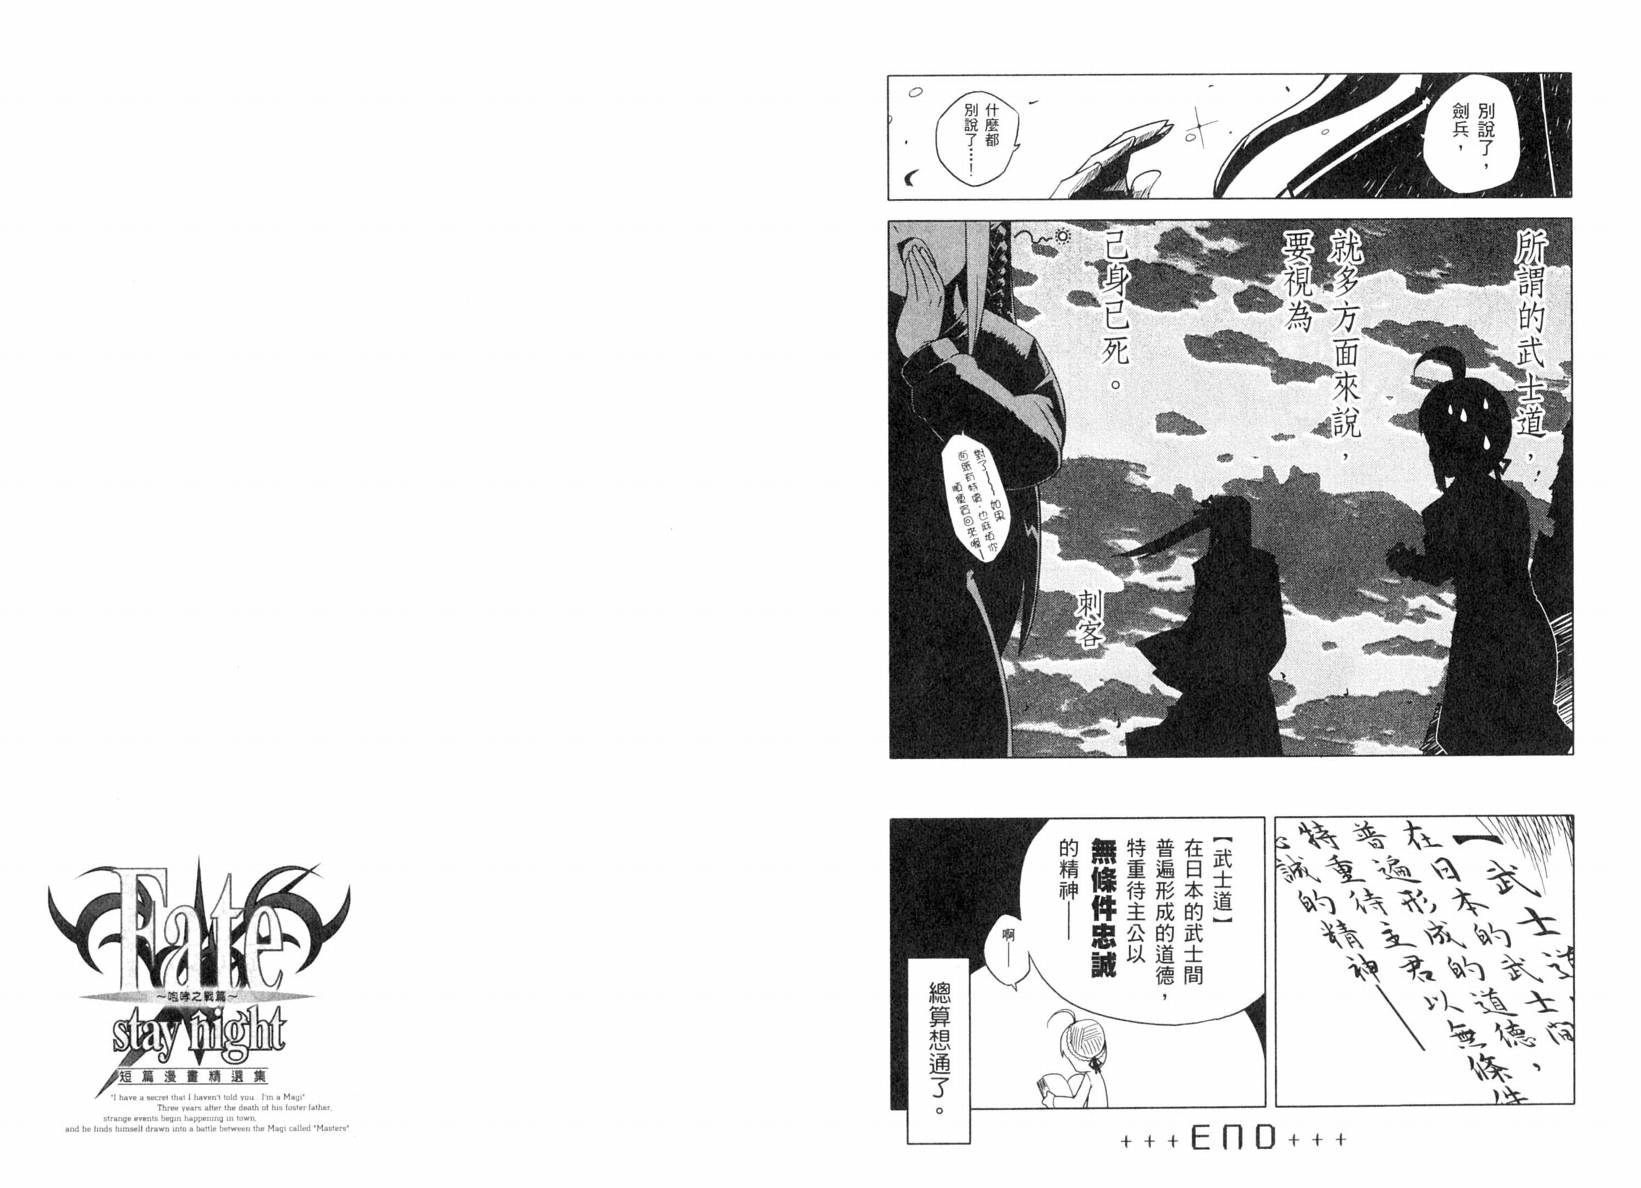 Fatestaynight 短篇漫画精选集 - 咆哮之战篇(1/2) - 2